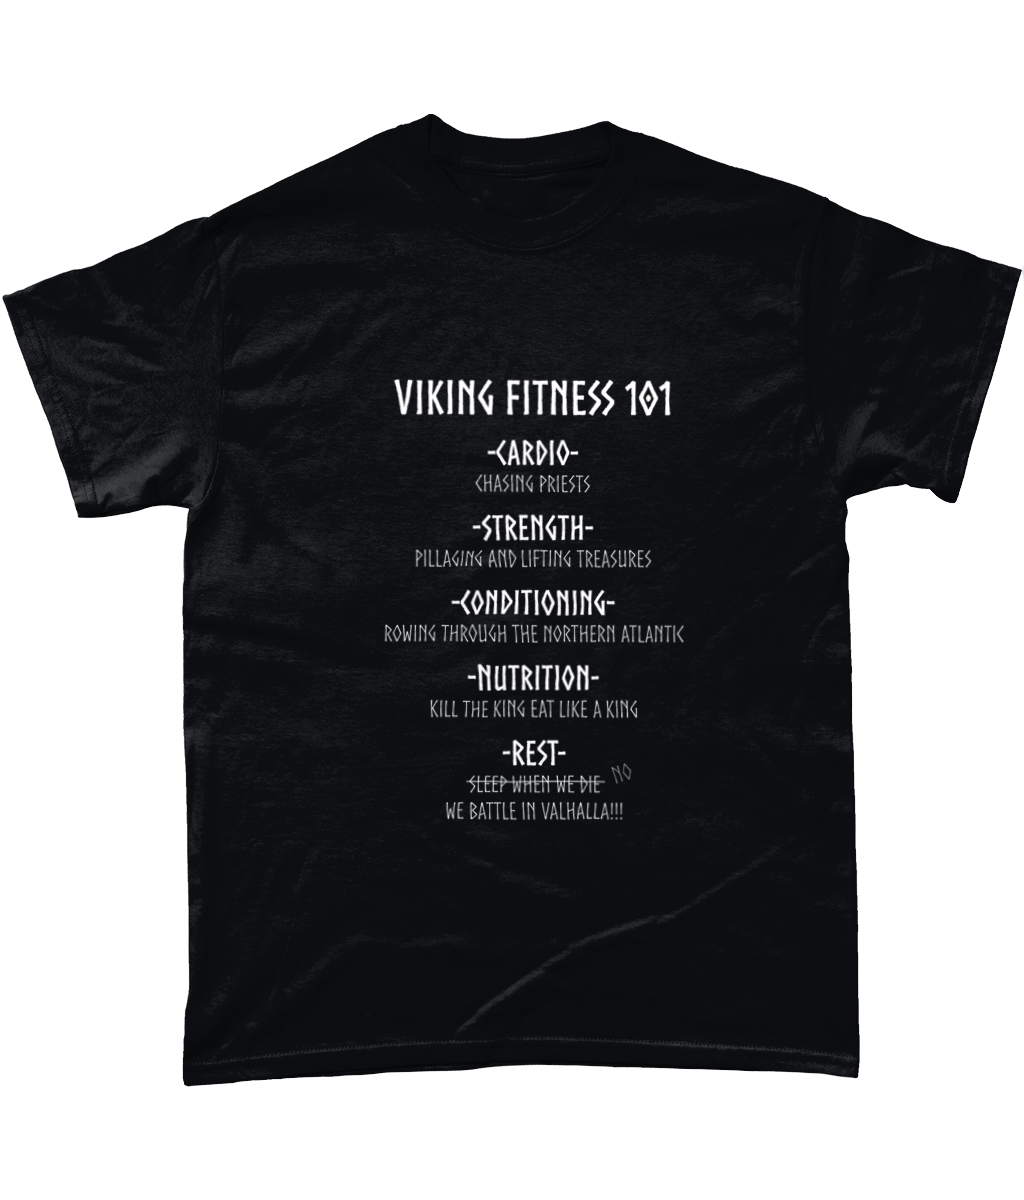 T-shirt musculation sang viking